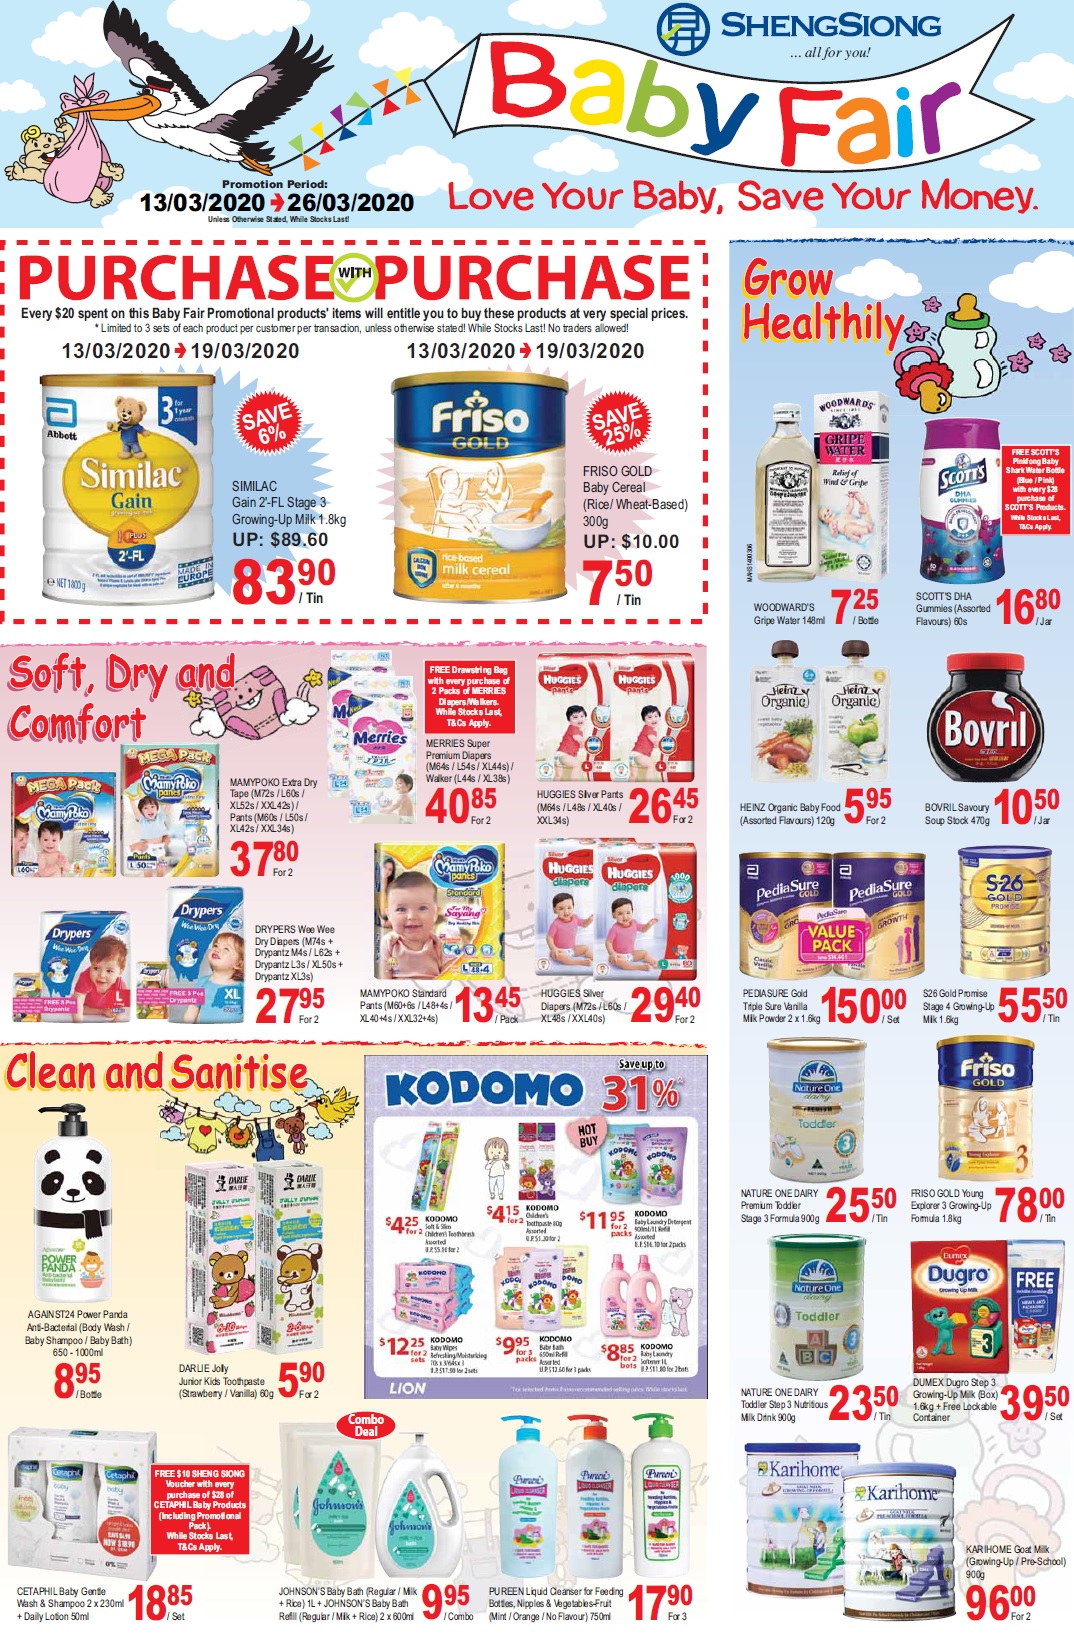 baby milk powder promotion in Singapore-abbott,dumex,friso,s26,nestle,enfa